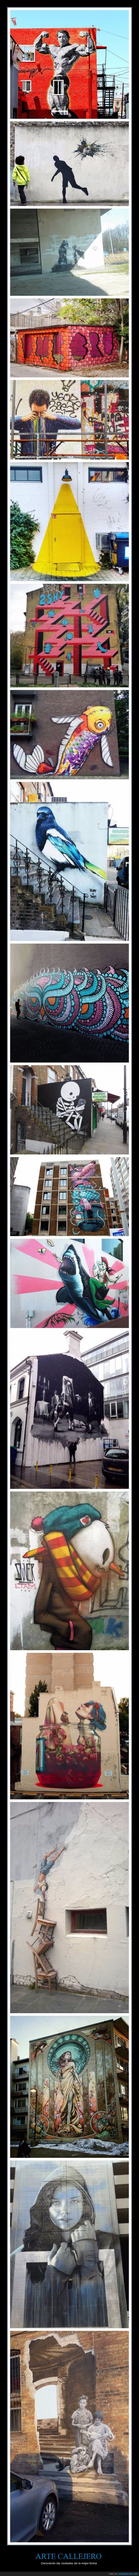 arte,callejero,graffiti,ilustraciones,street art